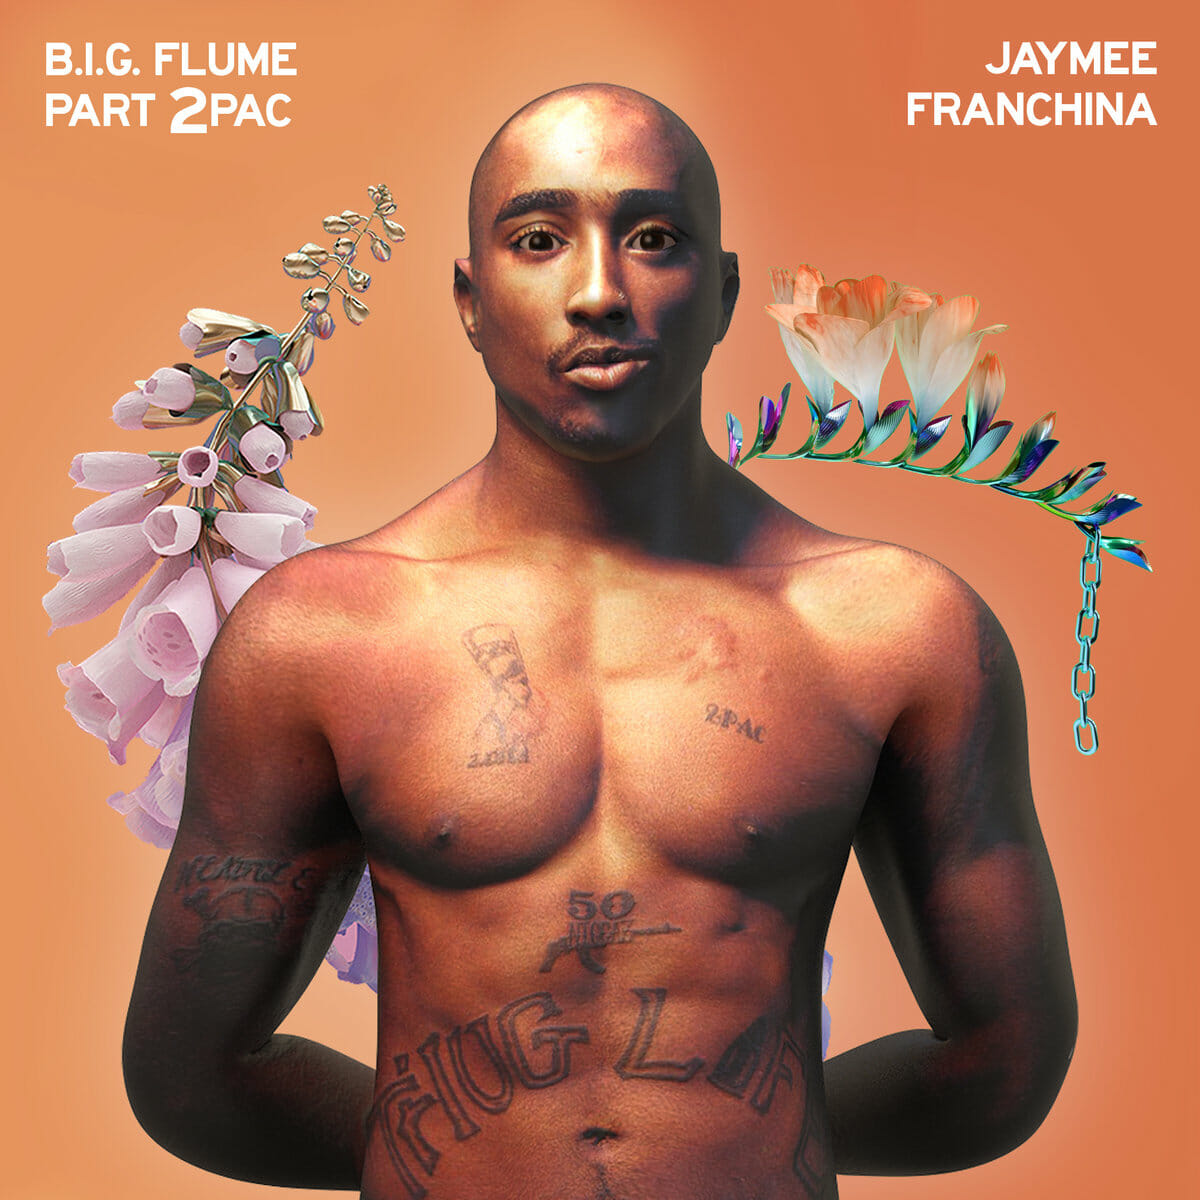 Listen to this incredible Flume and Tupac mash up album [Stream]Flume Tupac Mashup Artwork